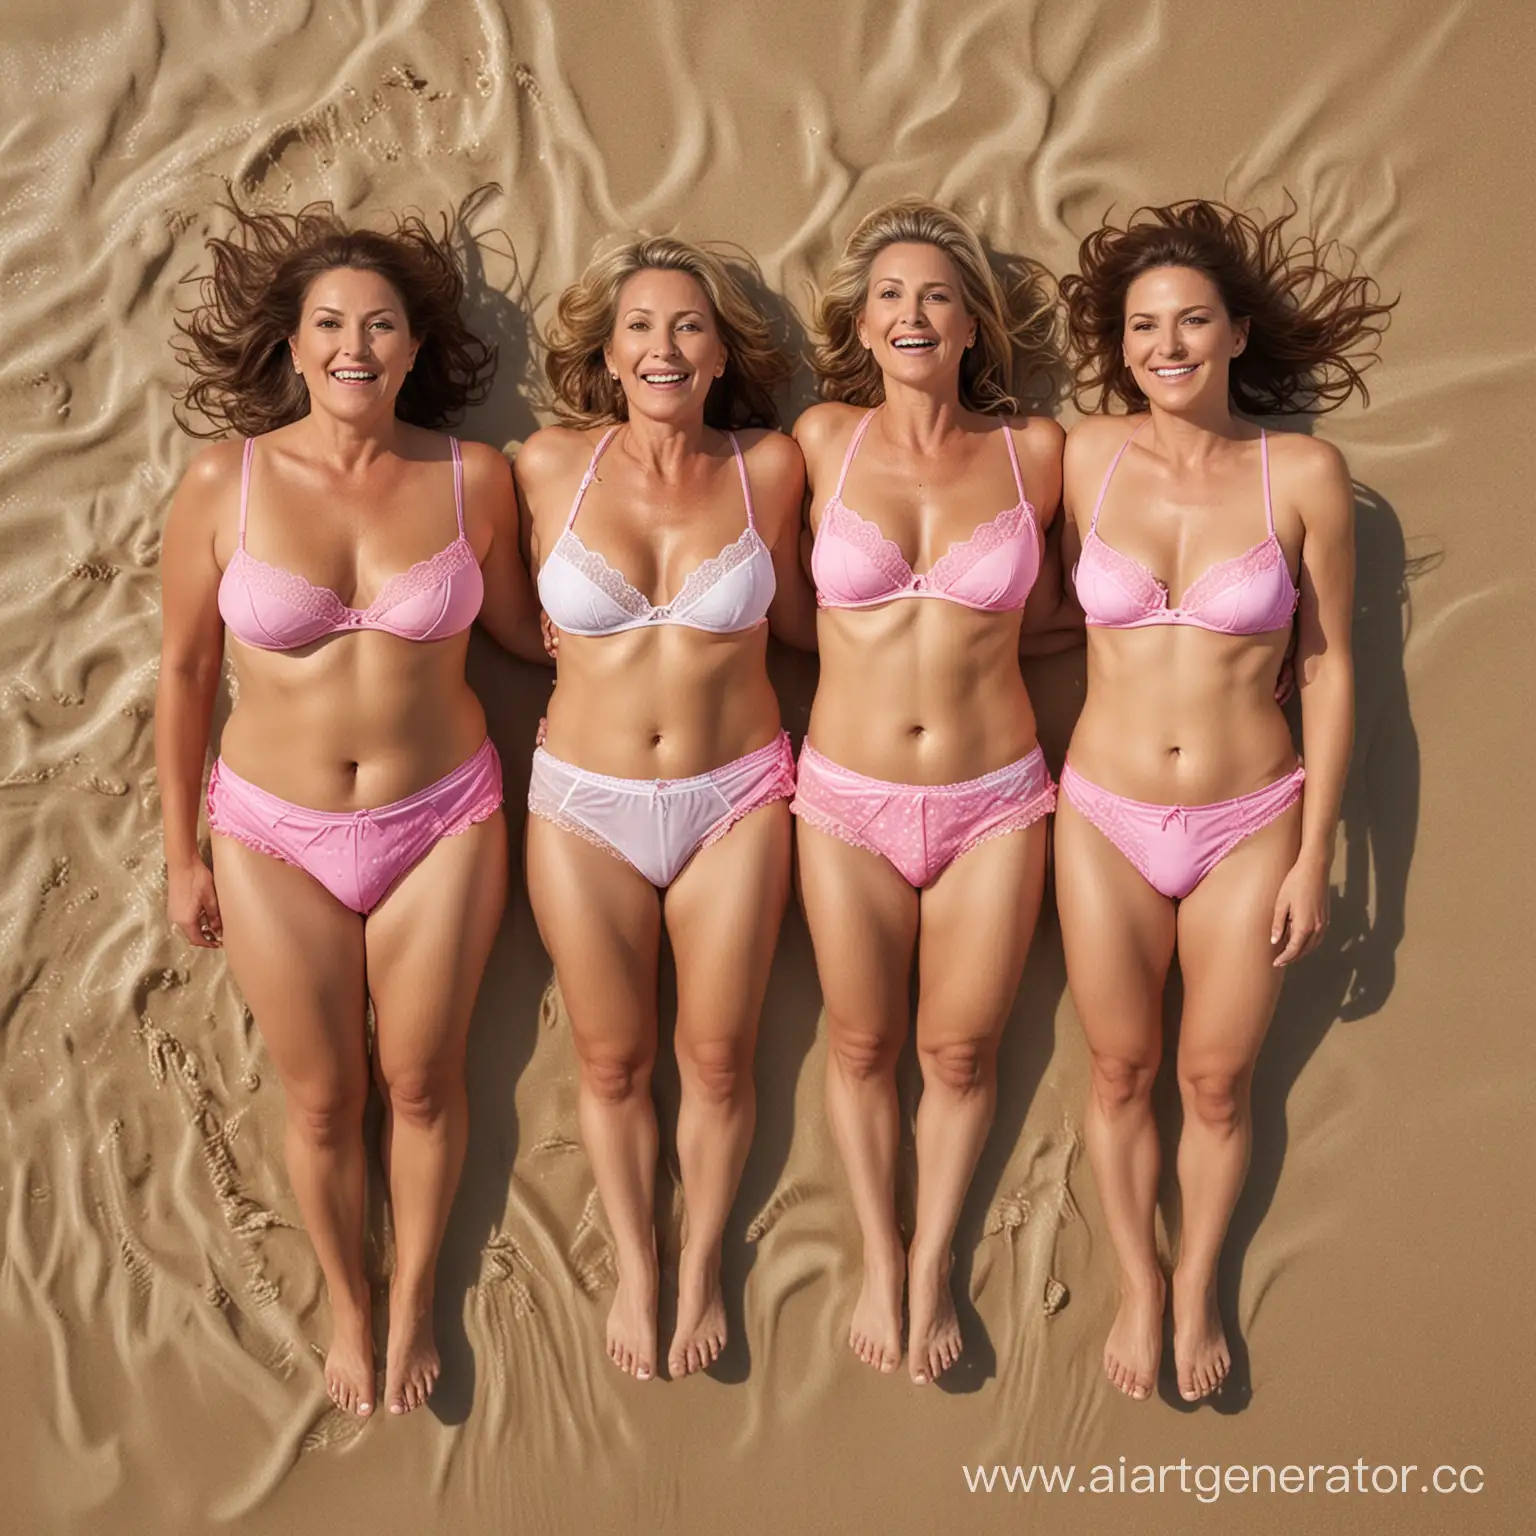 MiddleAged-Women-Wearing-Pink-Panties-on-Beach